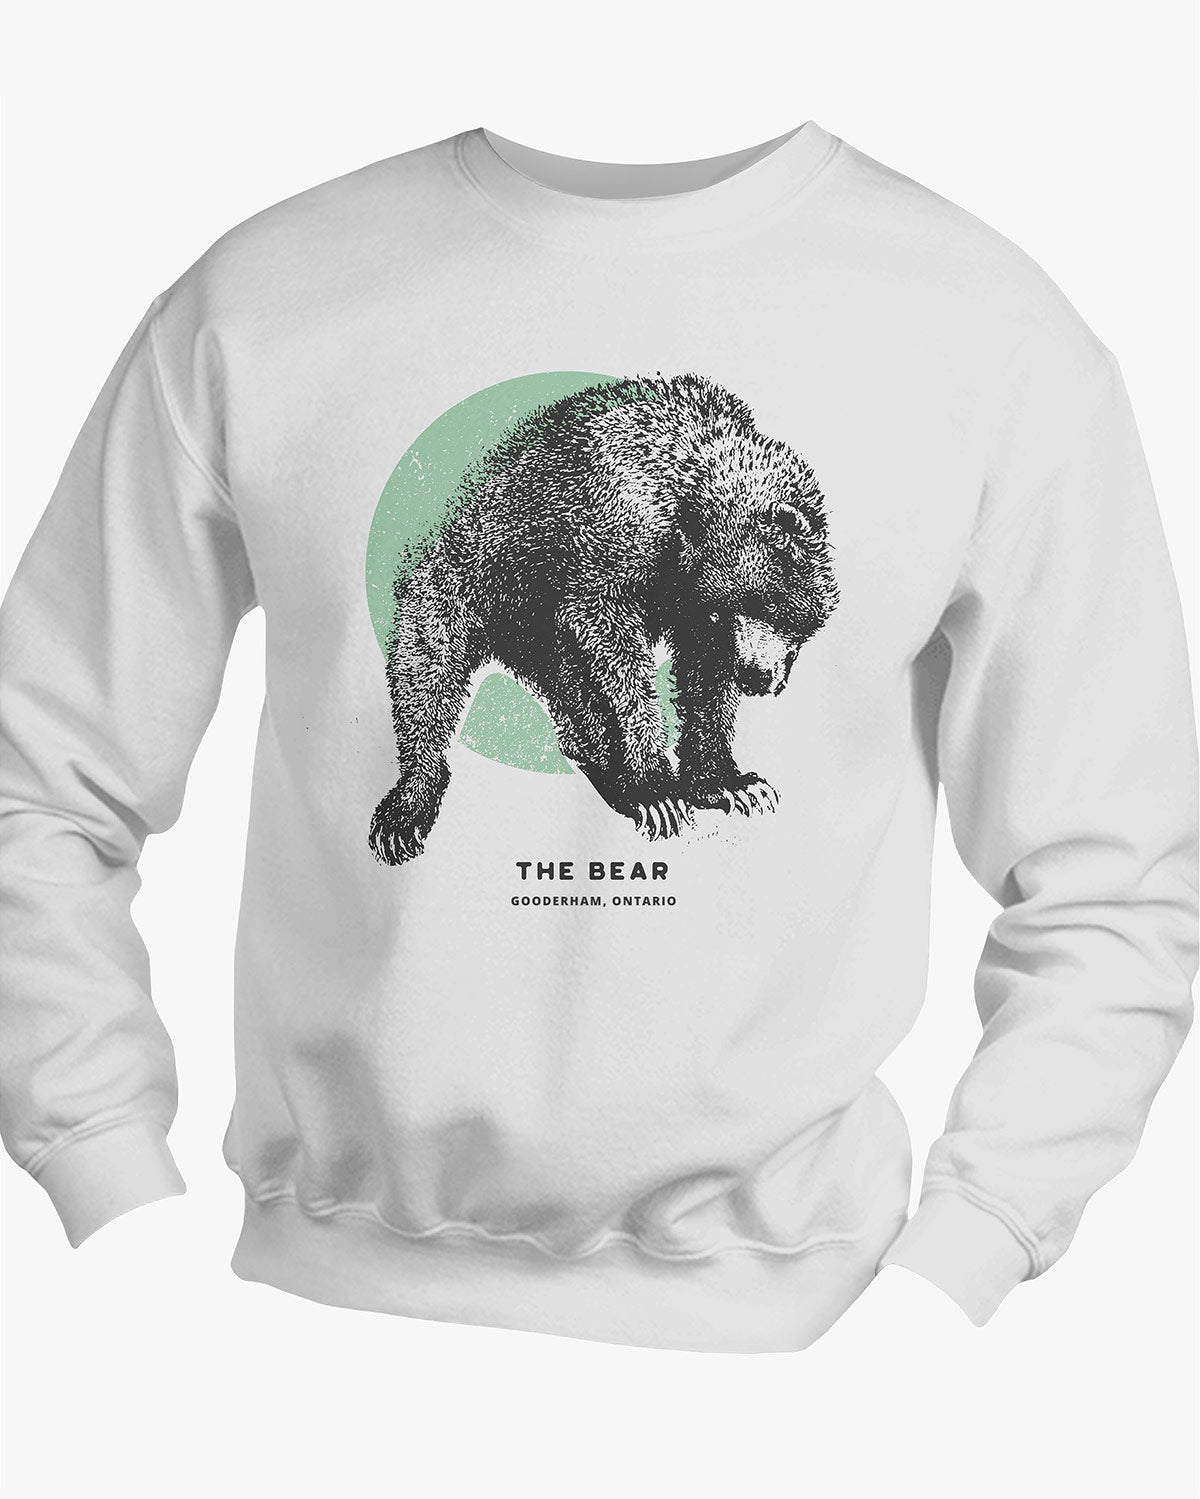 The Bear - Gooderham - Sweater